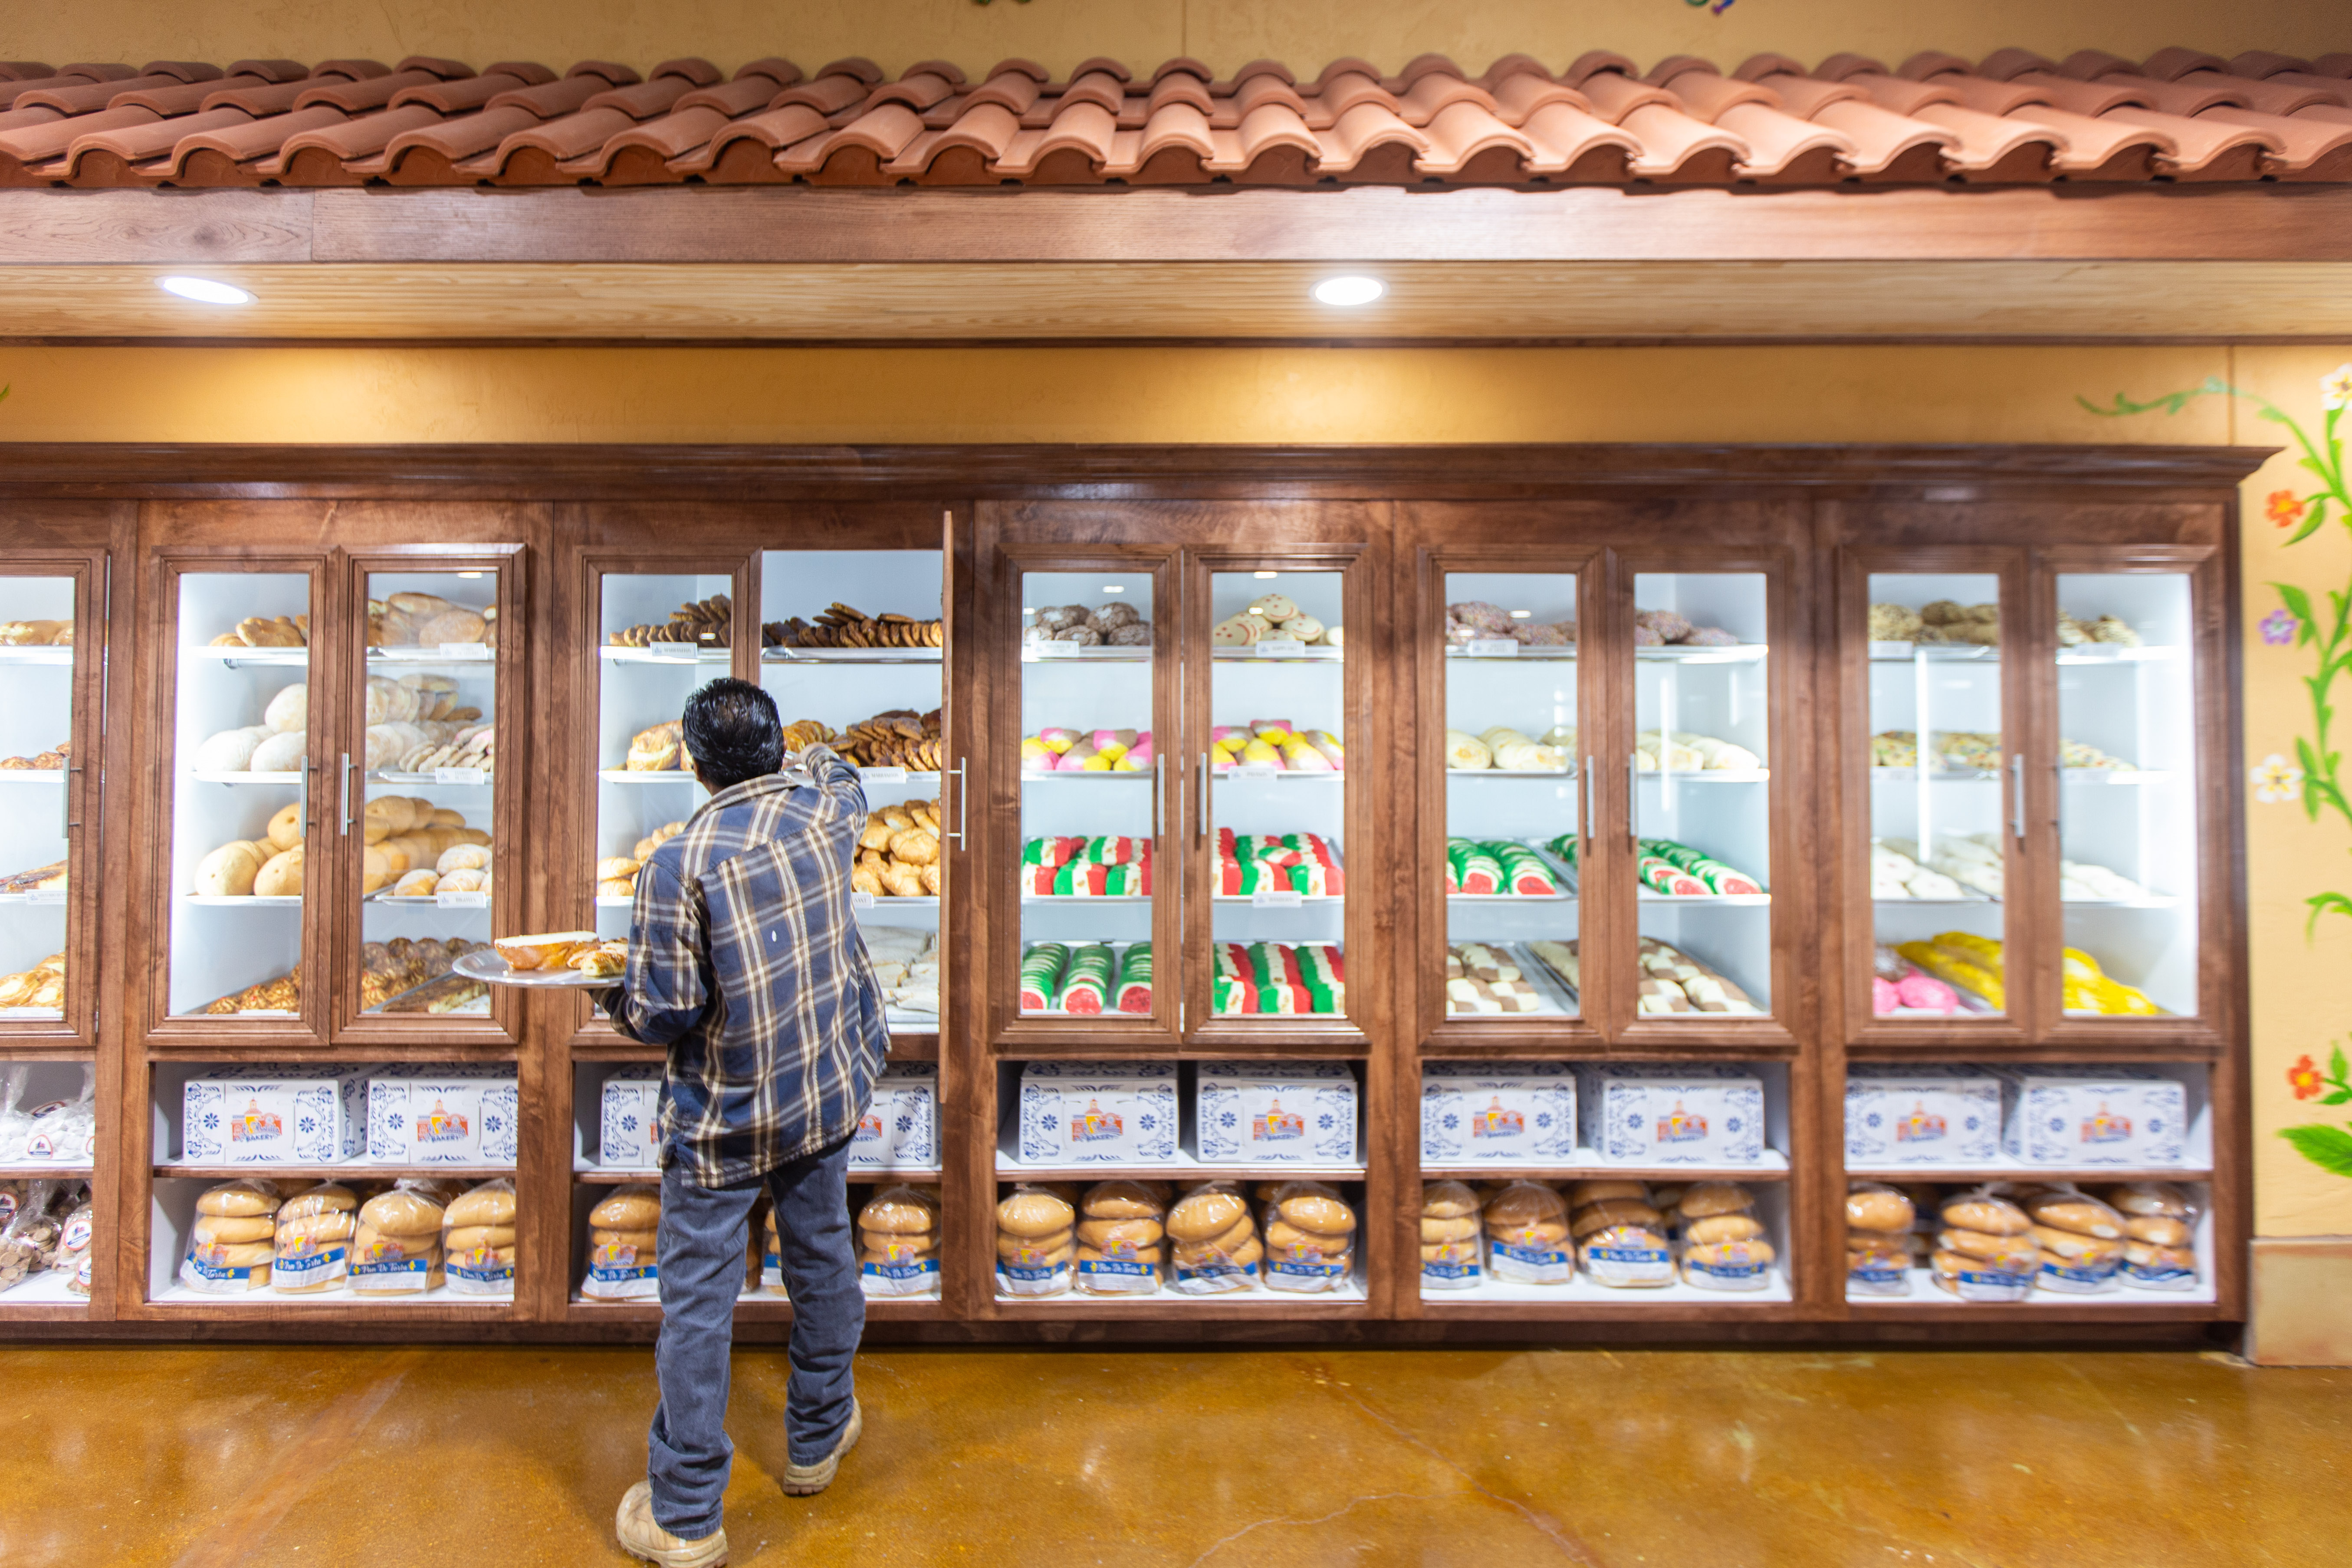 A man loads up the bakery shelves at El Bolillo bakery.